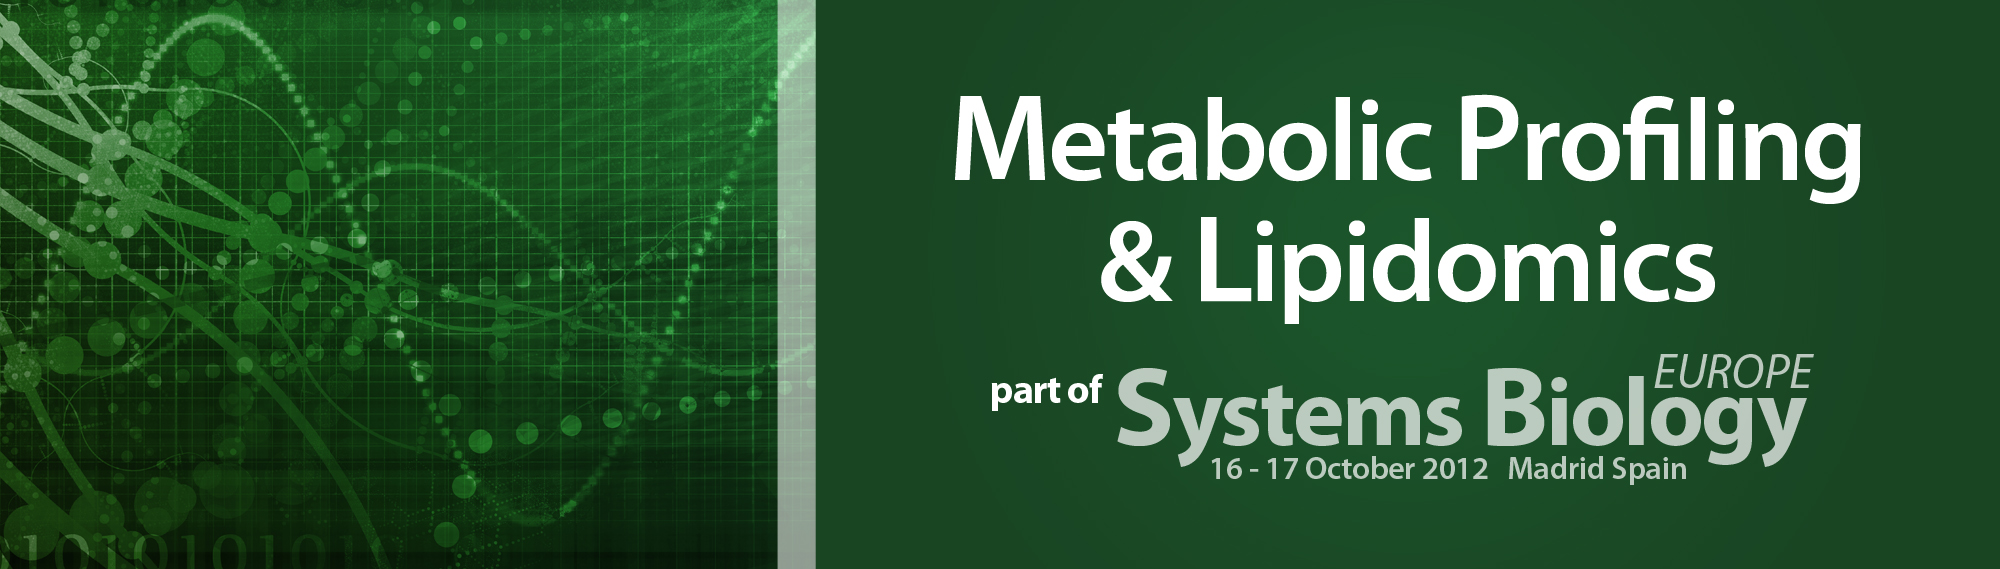 Metabolic Profiling & Lipidomics